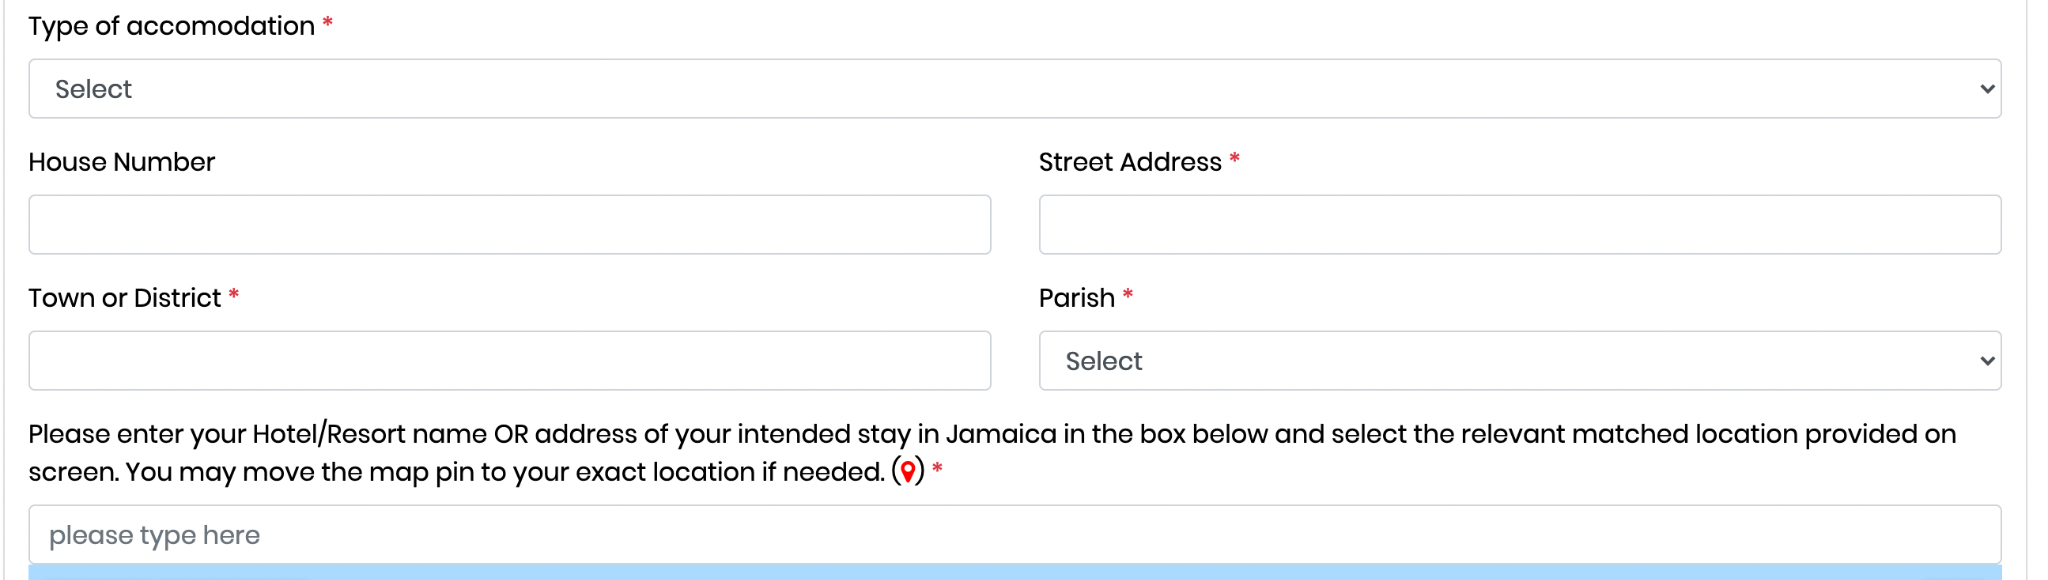 jetblue travel authorization form jamaica